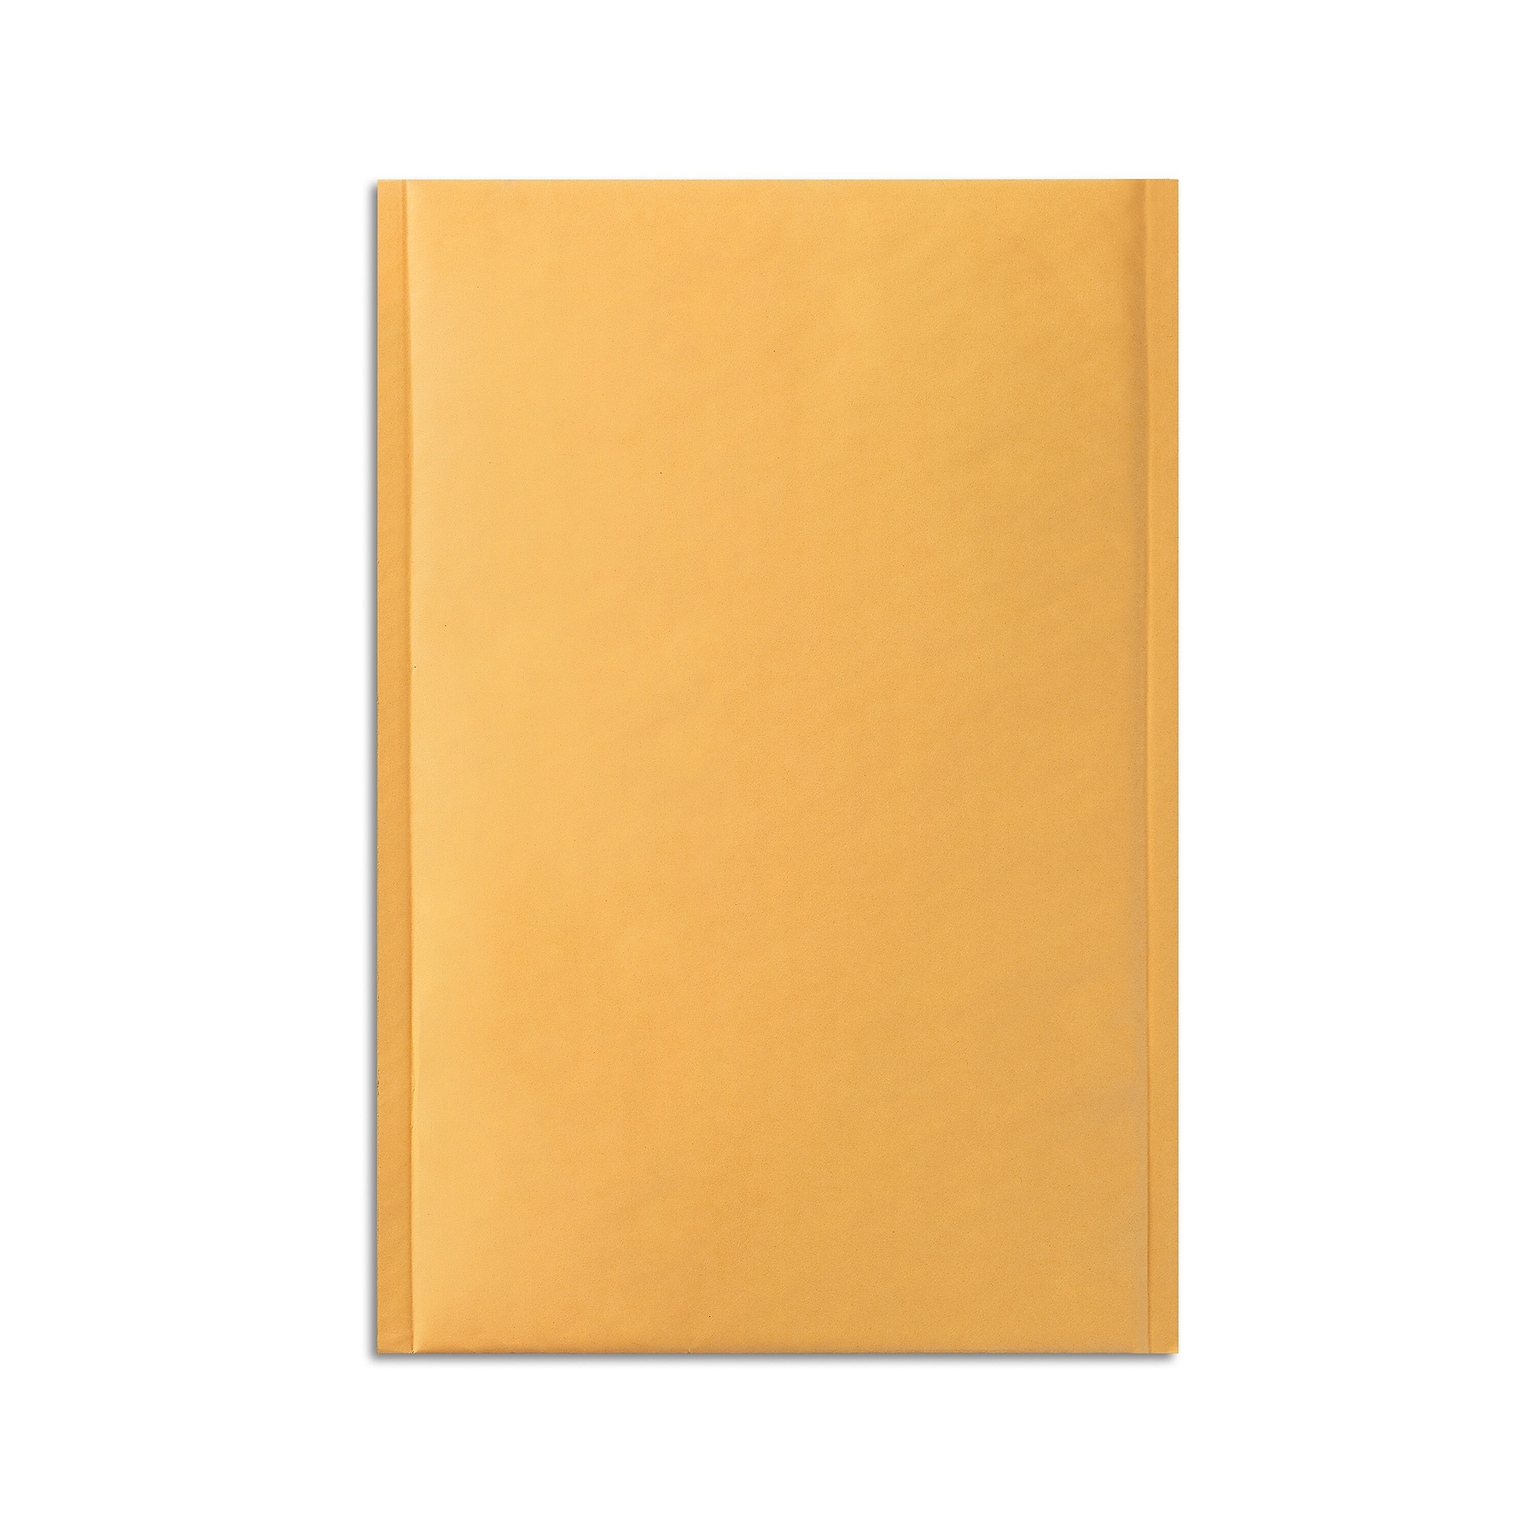 8.5W x 11L Peel & Seal Bubble Mailer, #2, 12/Pack (51580-CC)